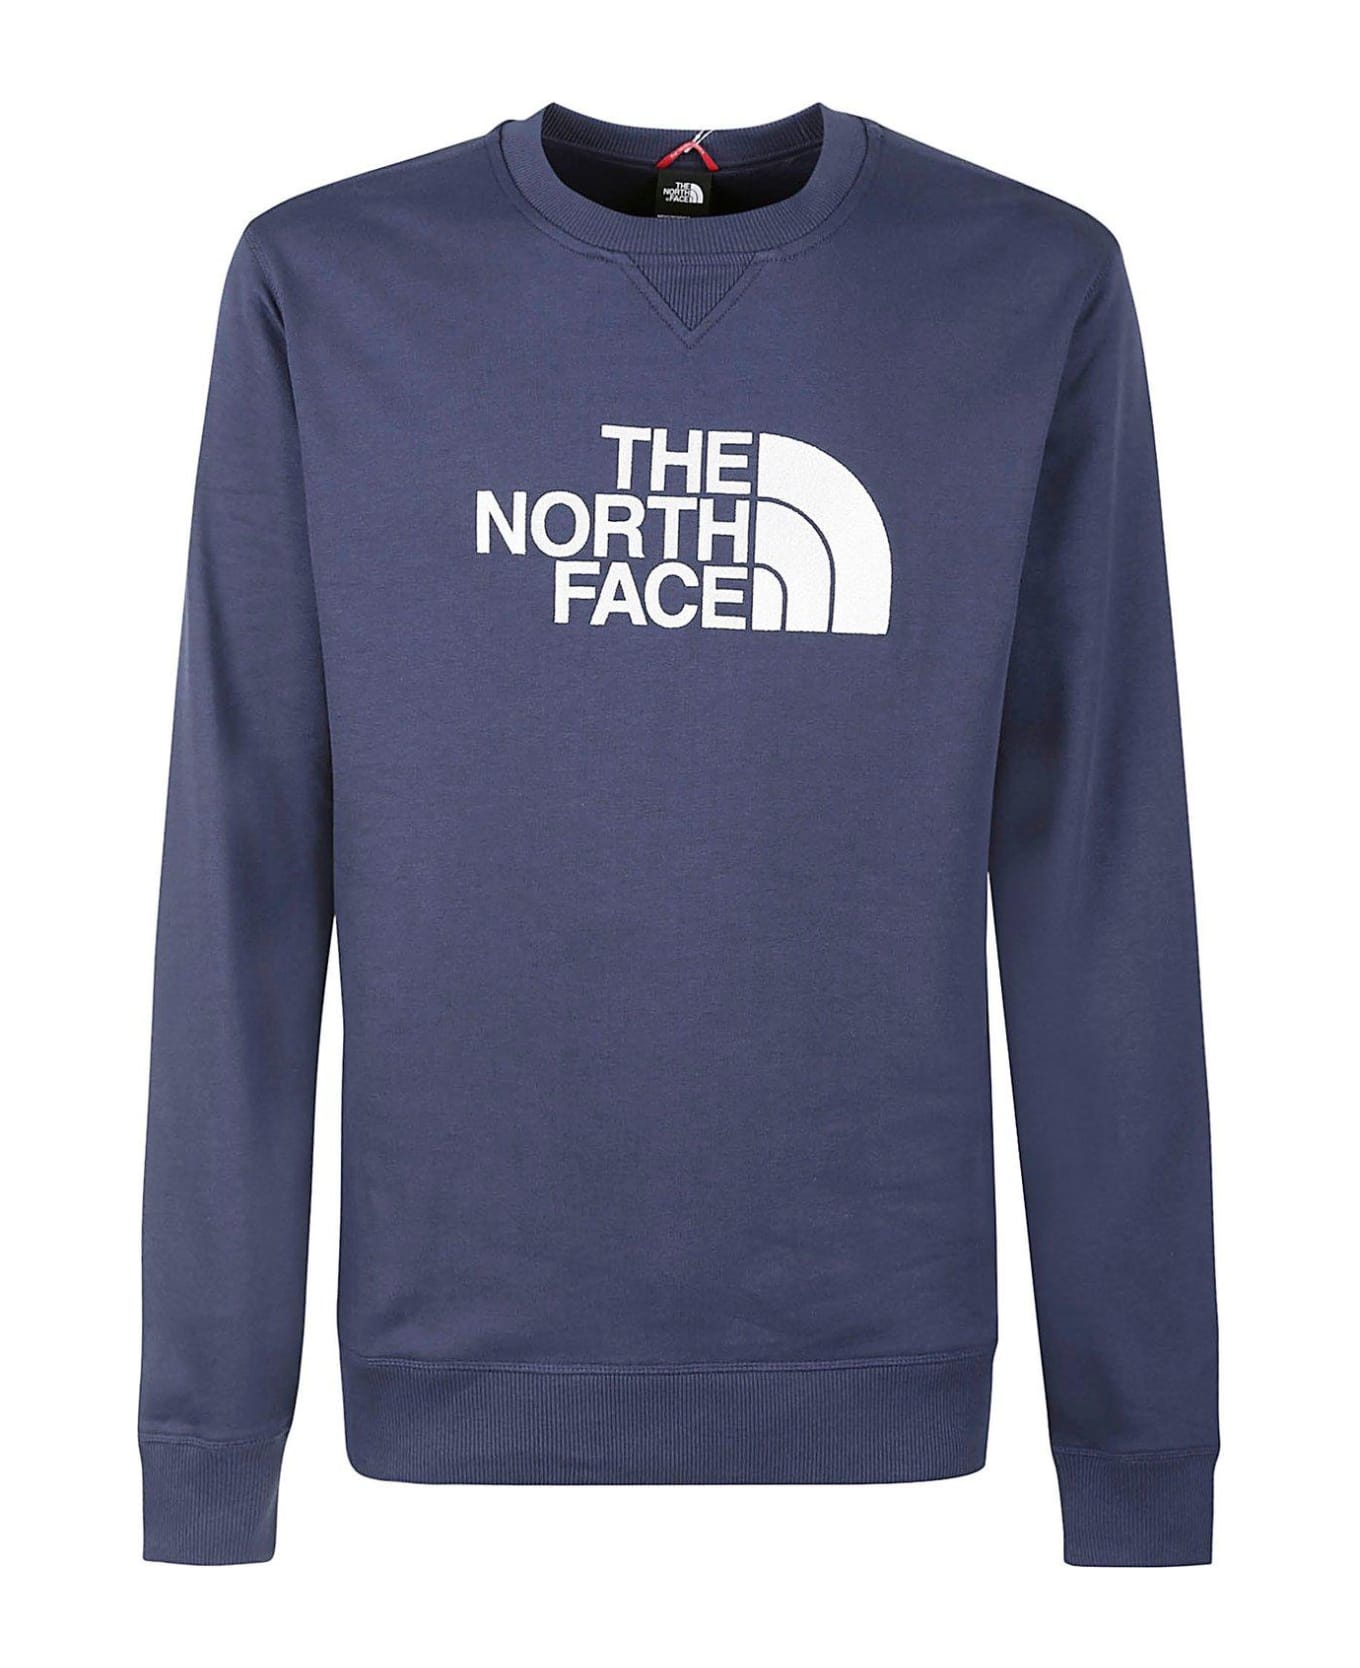 The North Face Logo Printed Crewneck Sweatshirt フリース